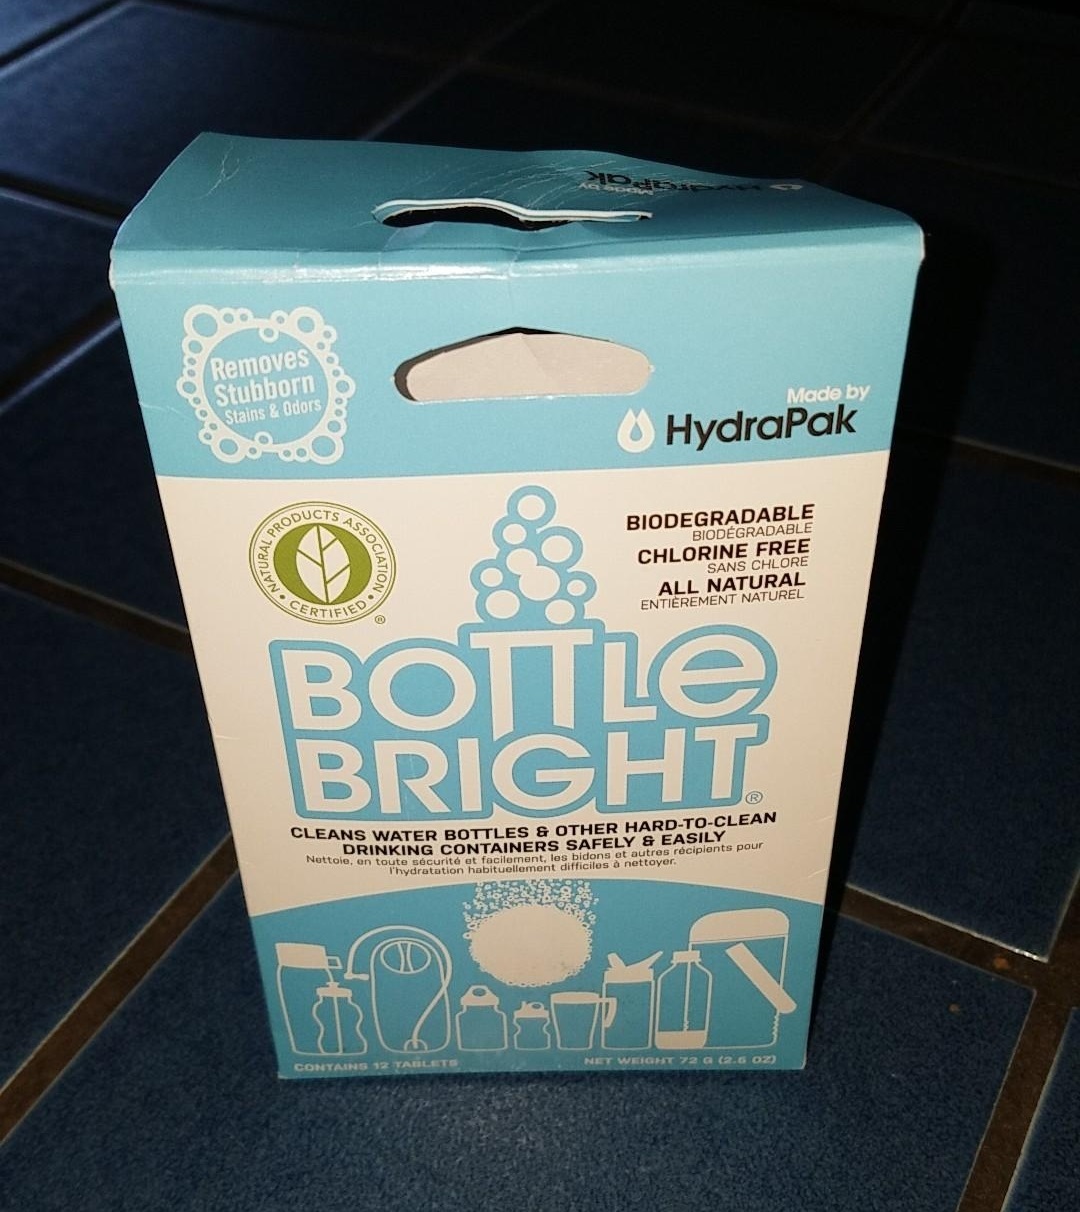 Bottle-bright